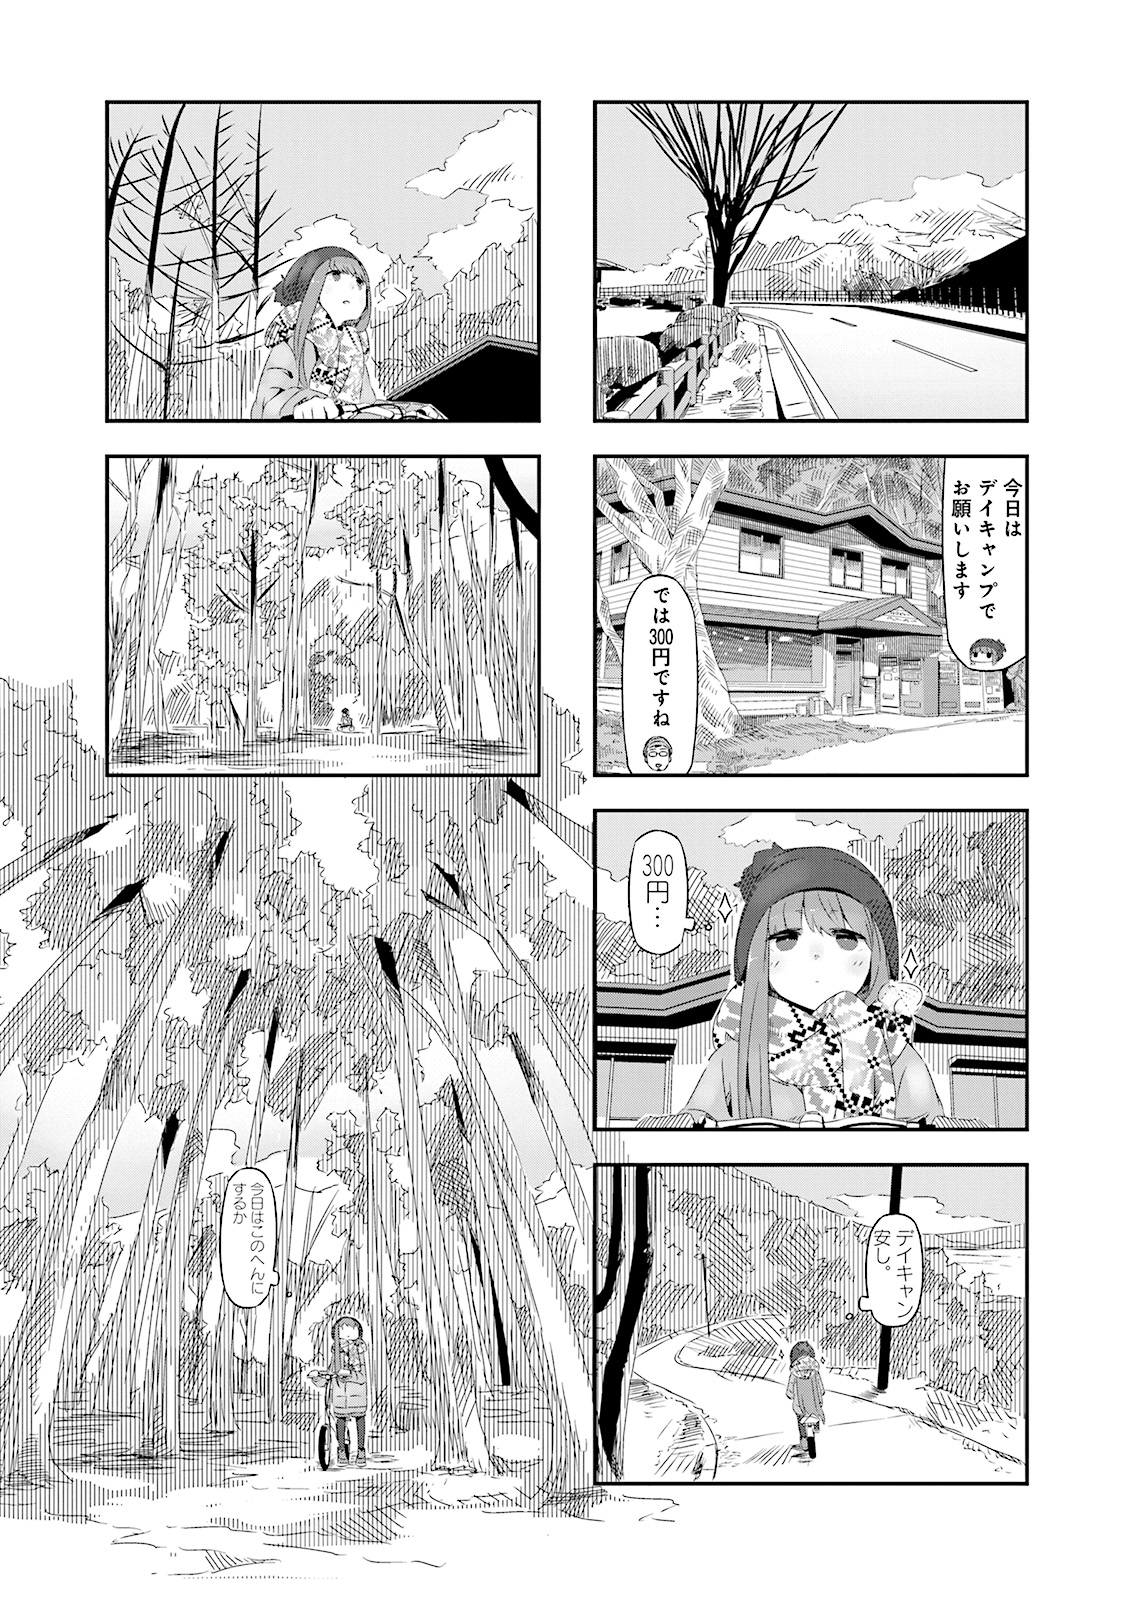 Yuru Camp - Chapter 6.5 - Page 2